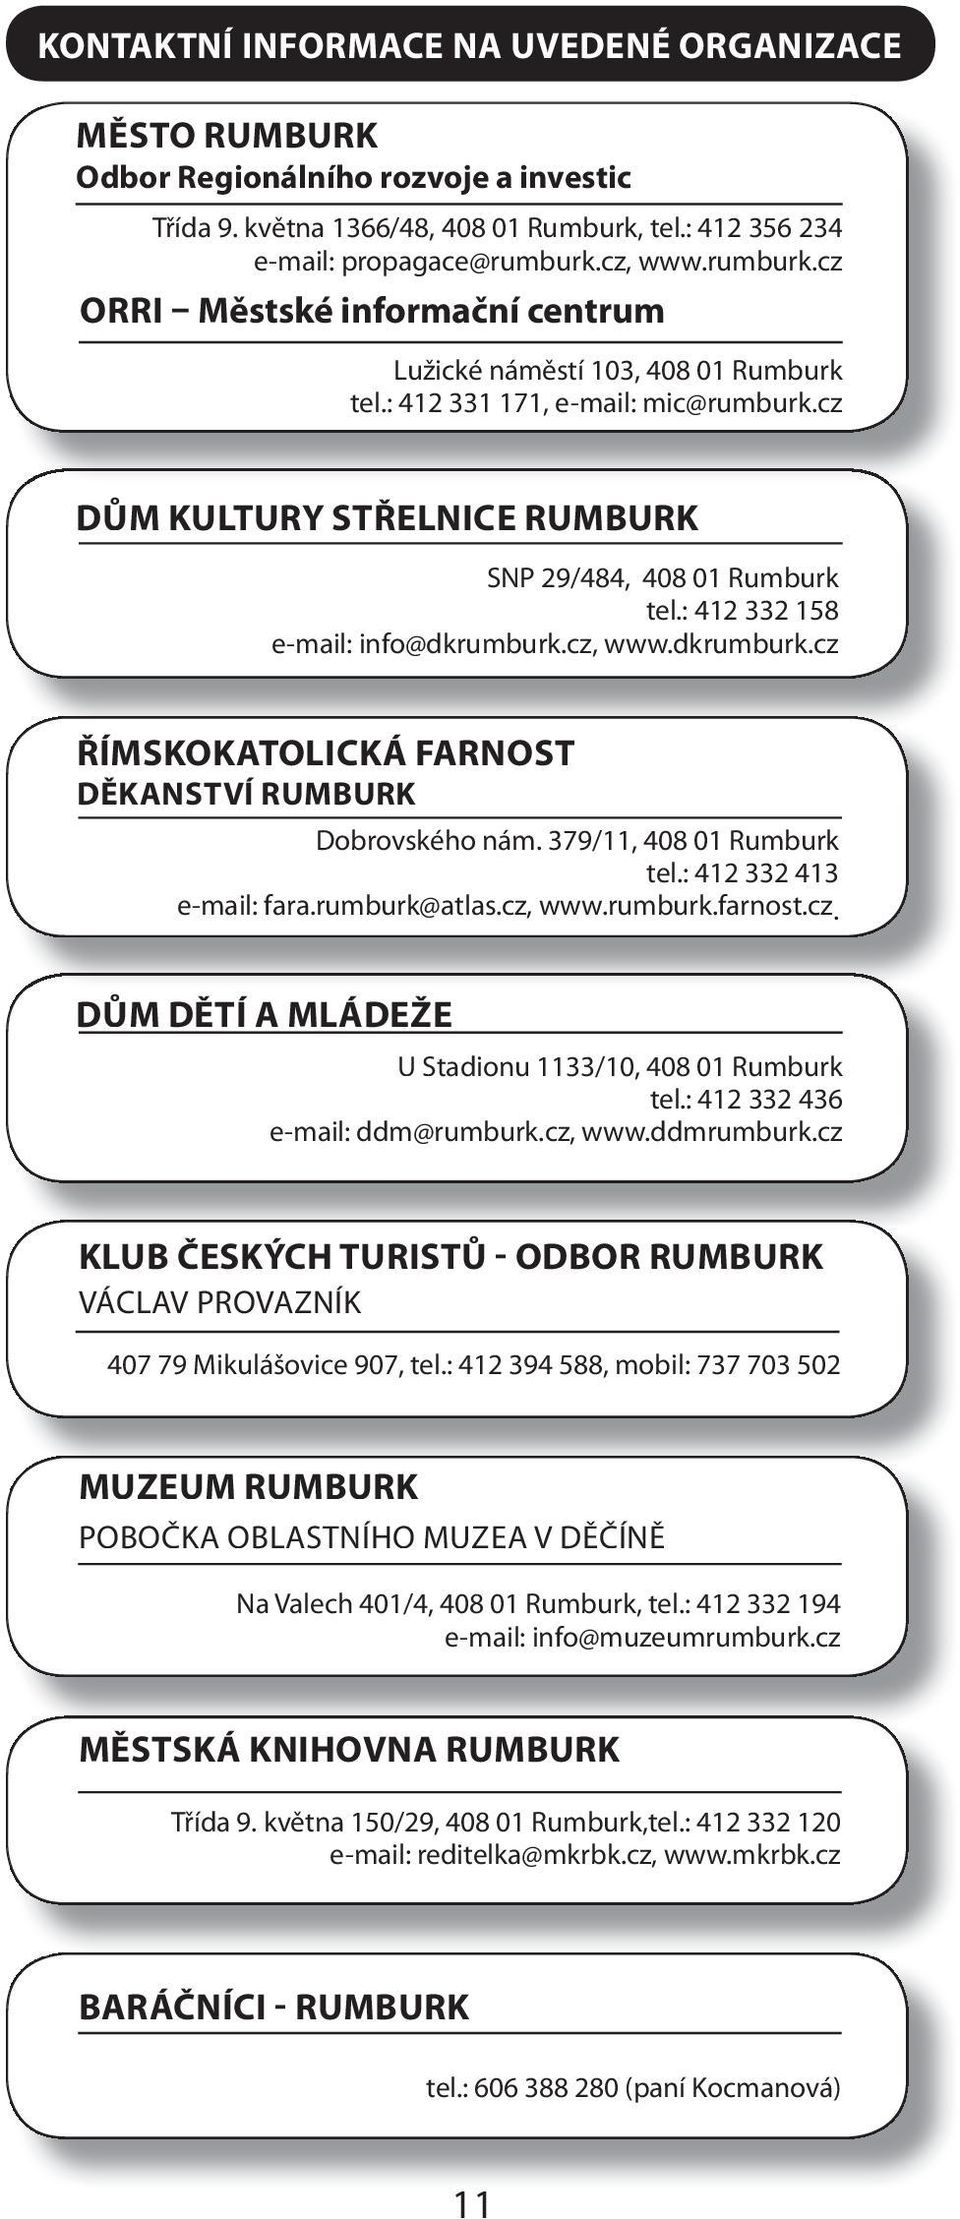 : 412 332 158 e-mail: info@dkrumburk.cz, www.dkrumburk.cz ŘÍMSKOKATOLICKÁ FARNOST DĚKANSTVÍ RUMBURK Dobrovského nám. 379/11, 408 01 tel.: 412 332 413 e-mail: fara.rumburk@atlas.cz, www.rumburk.farnost.